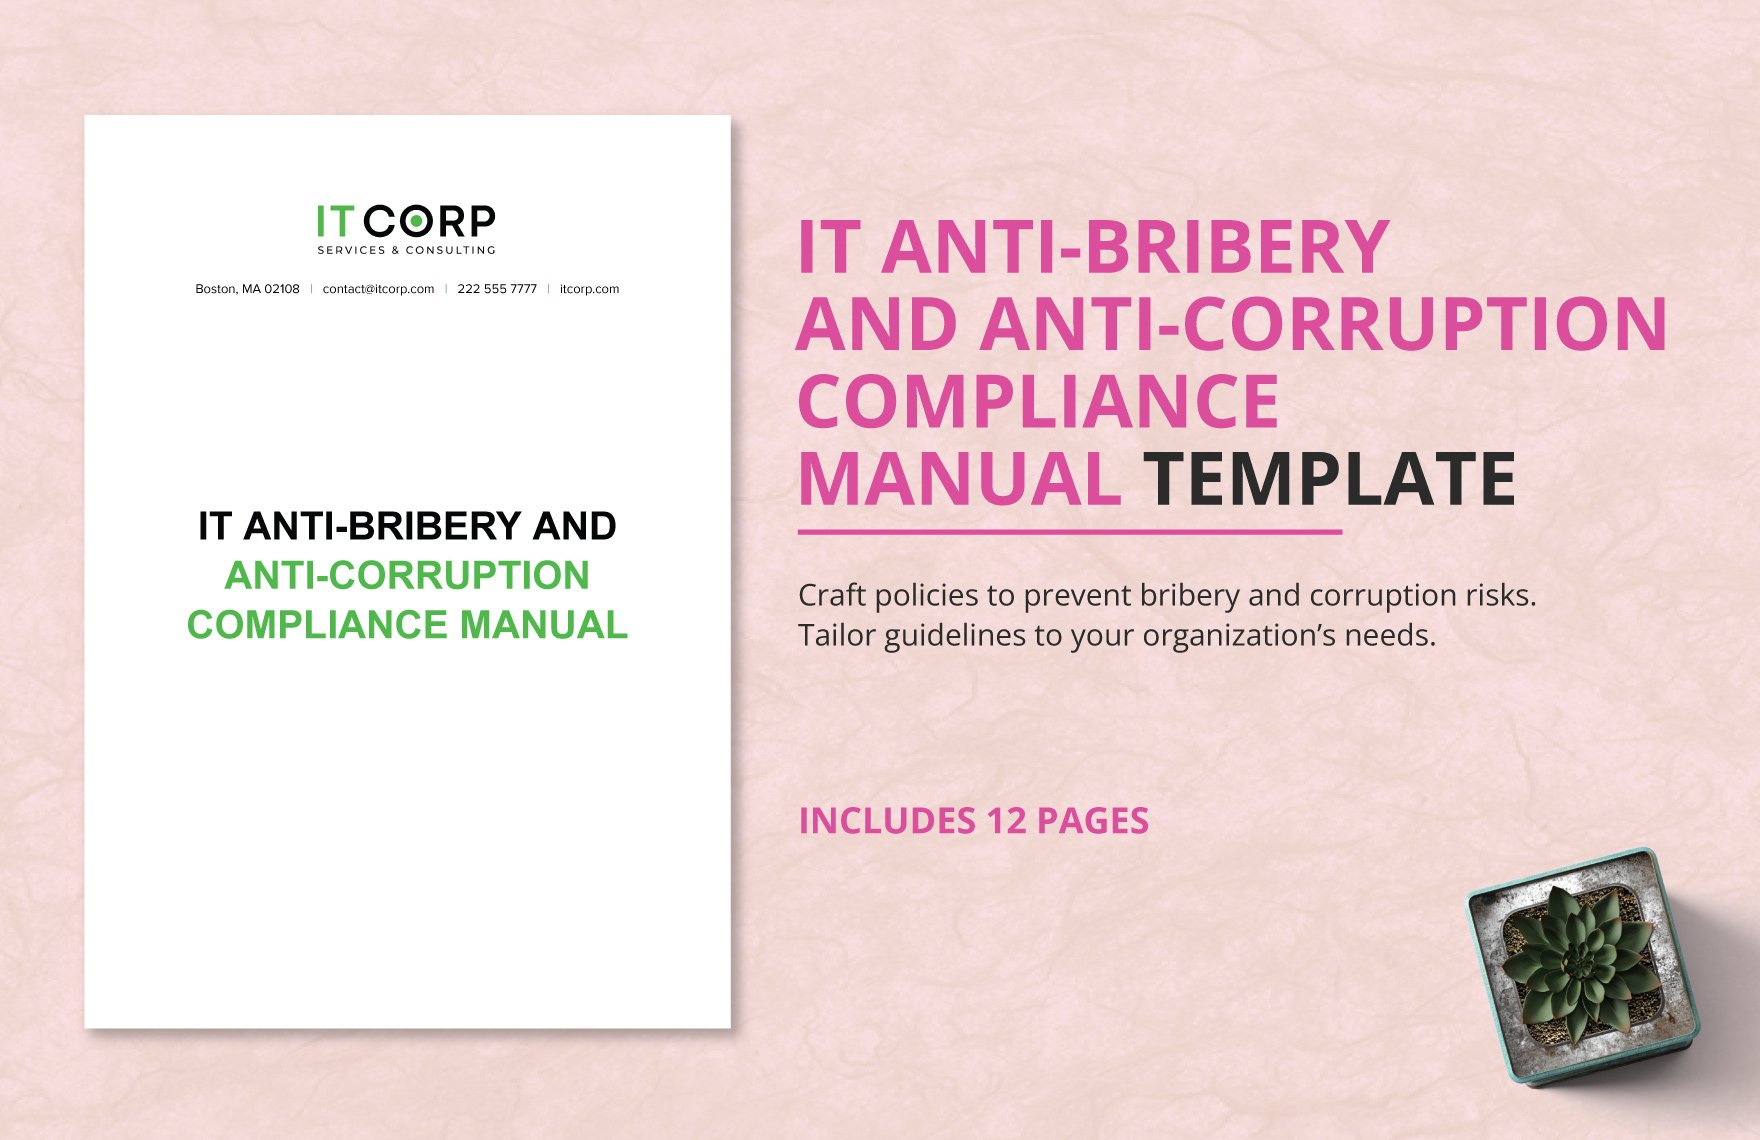 IT Anti-Bribery and Anti-Corruption Compliance Manual Template in Word, Google Docs, PDF